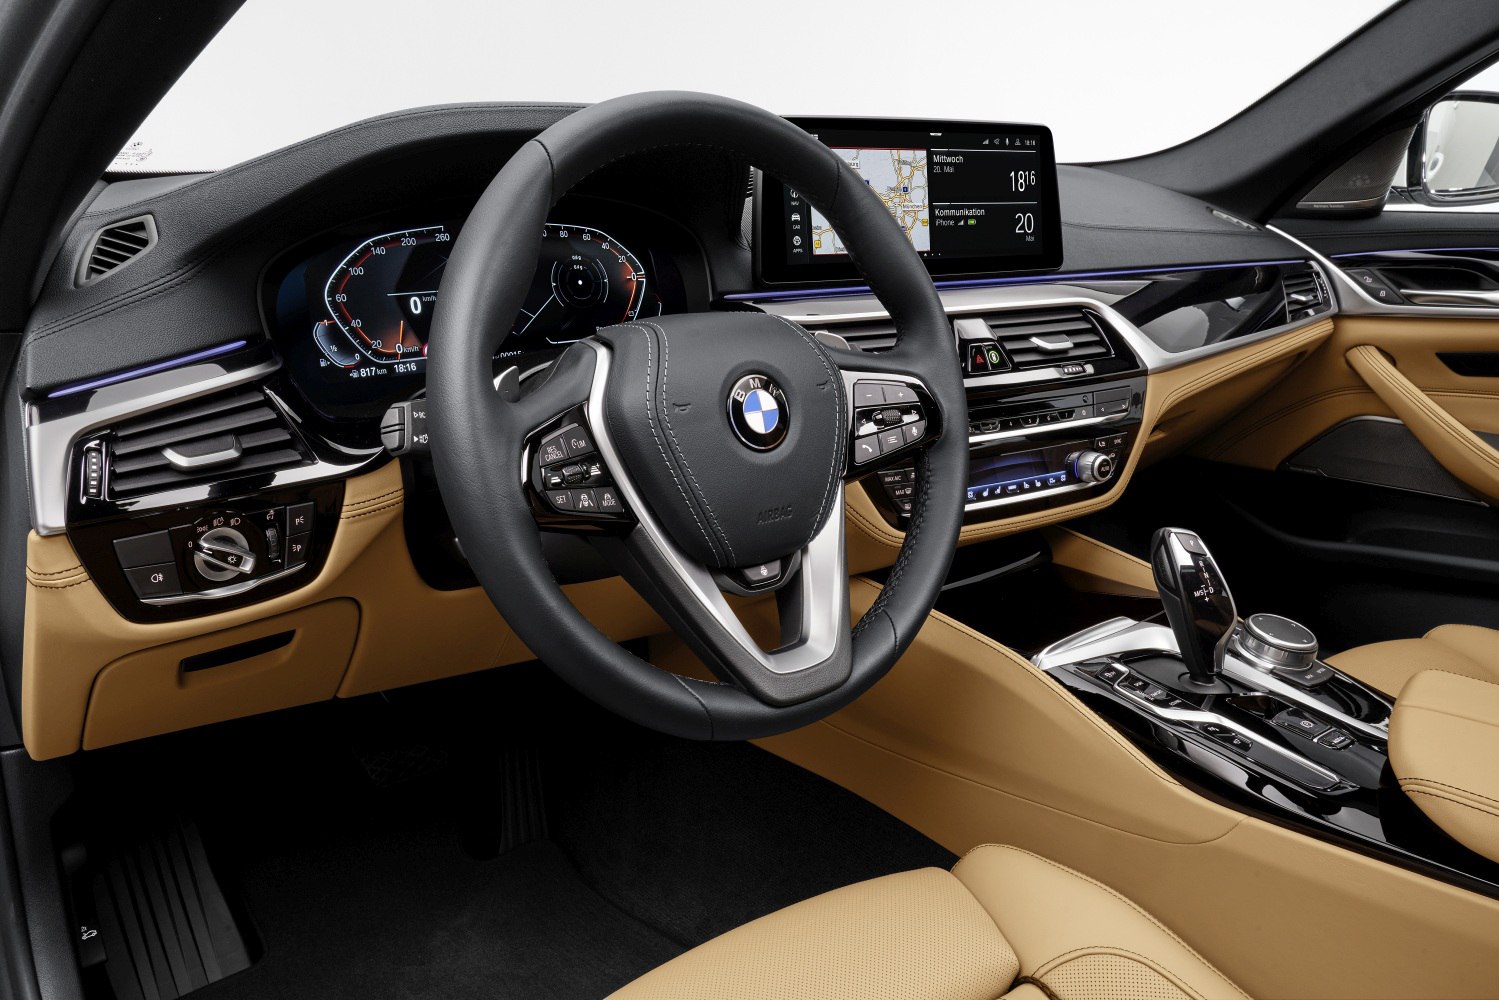 2020 BMW 5 Series Sedan (G30 LCI, facelift 2020) 540i (333 Hp